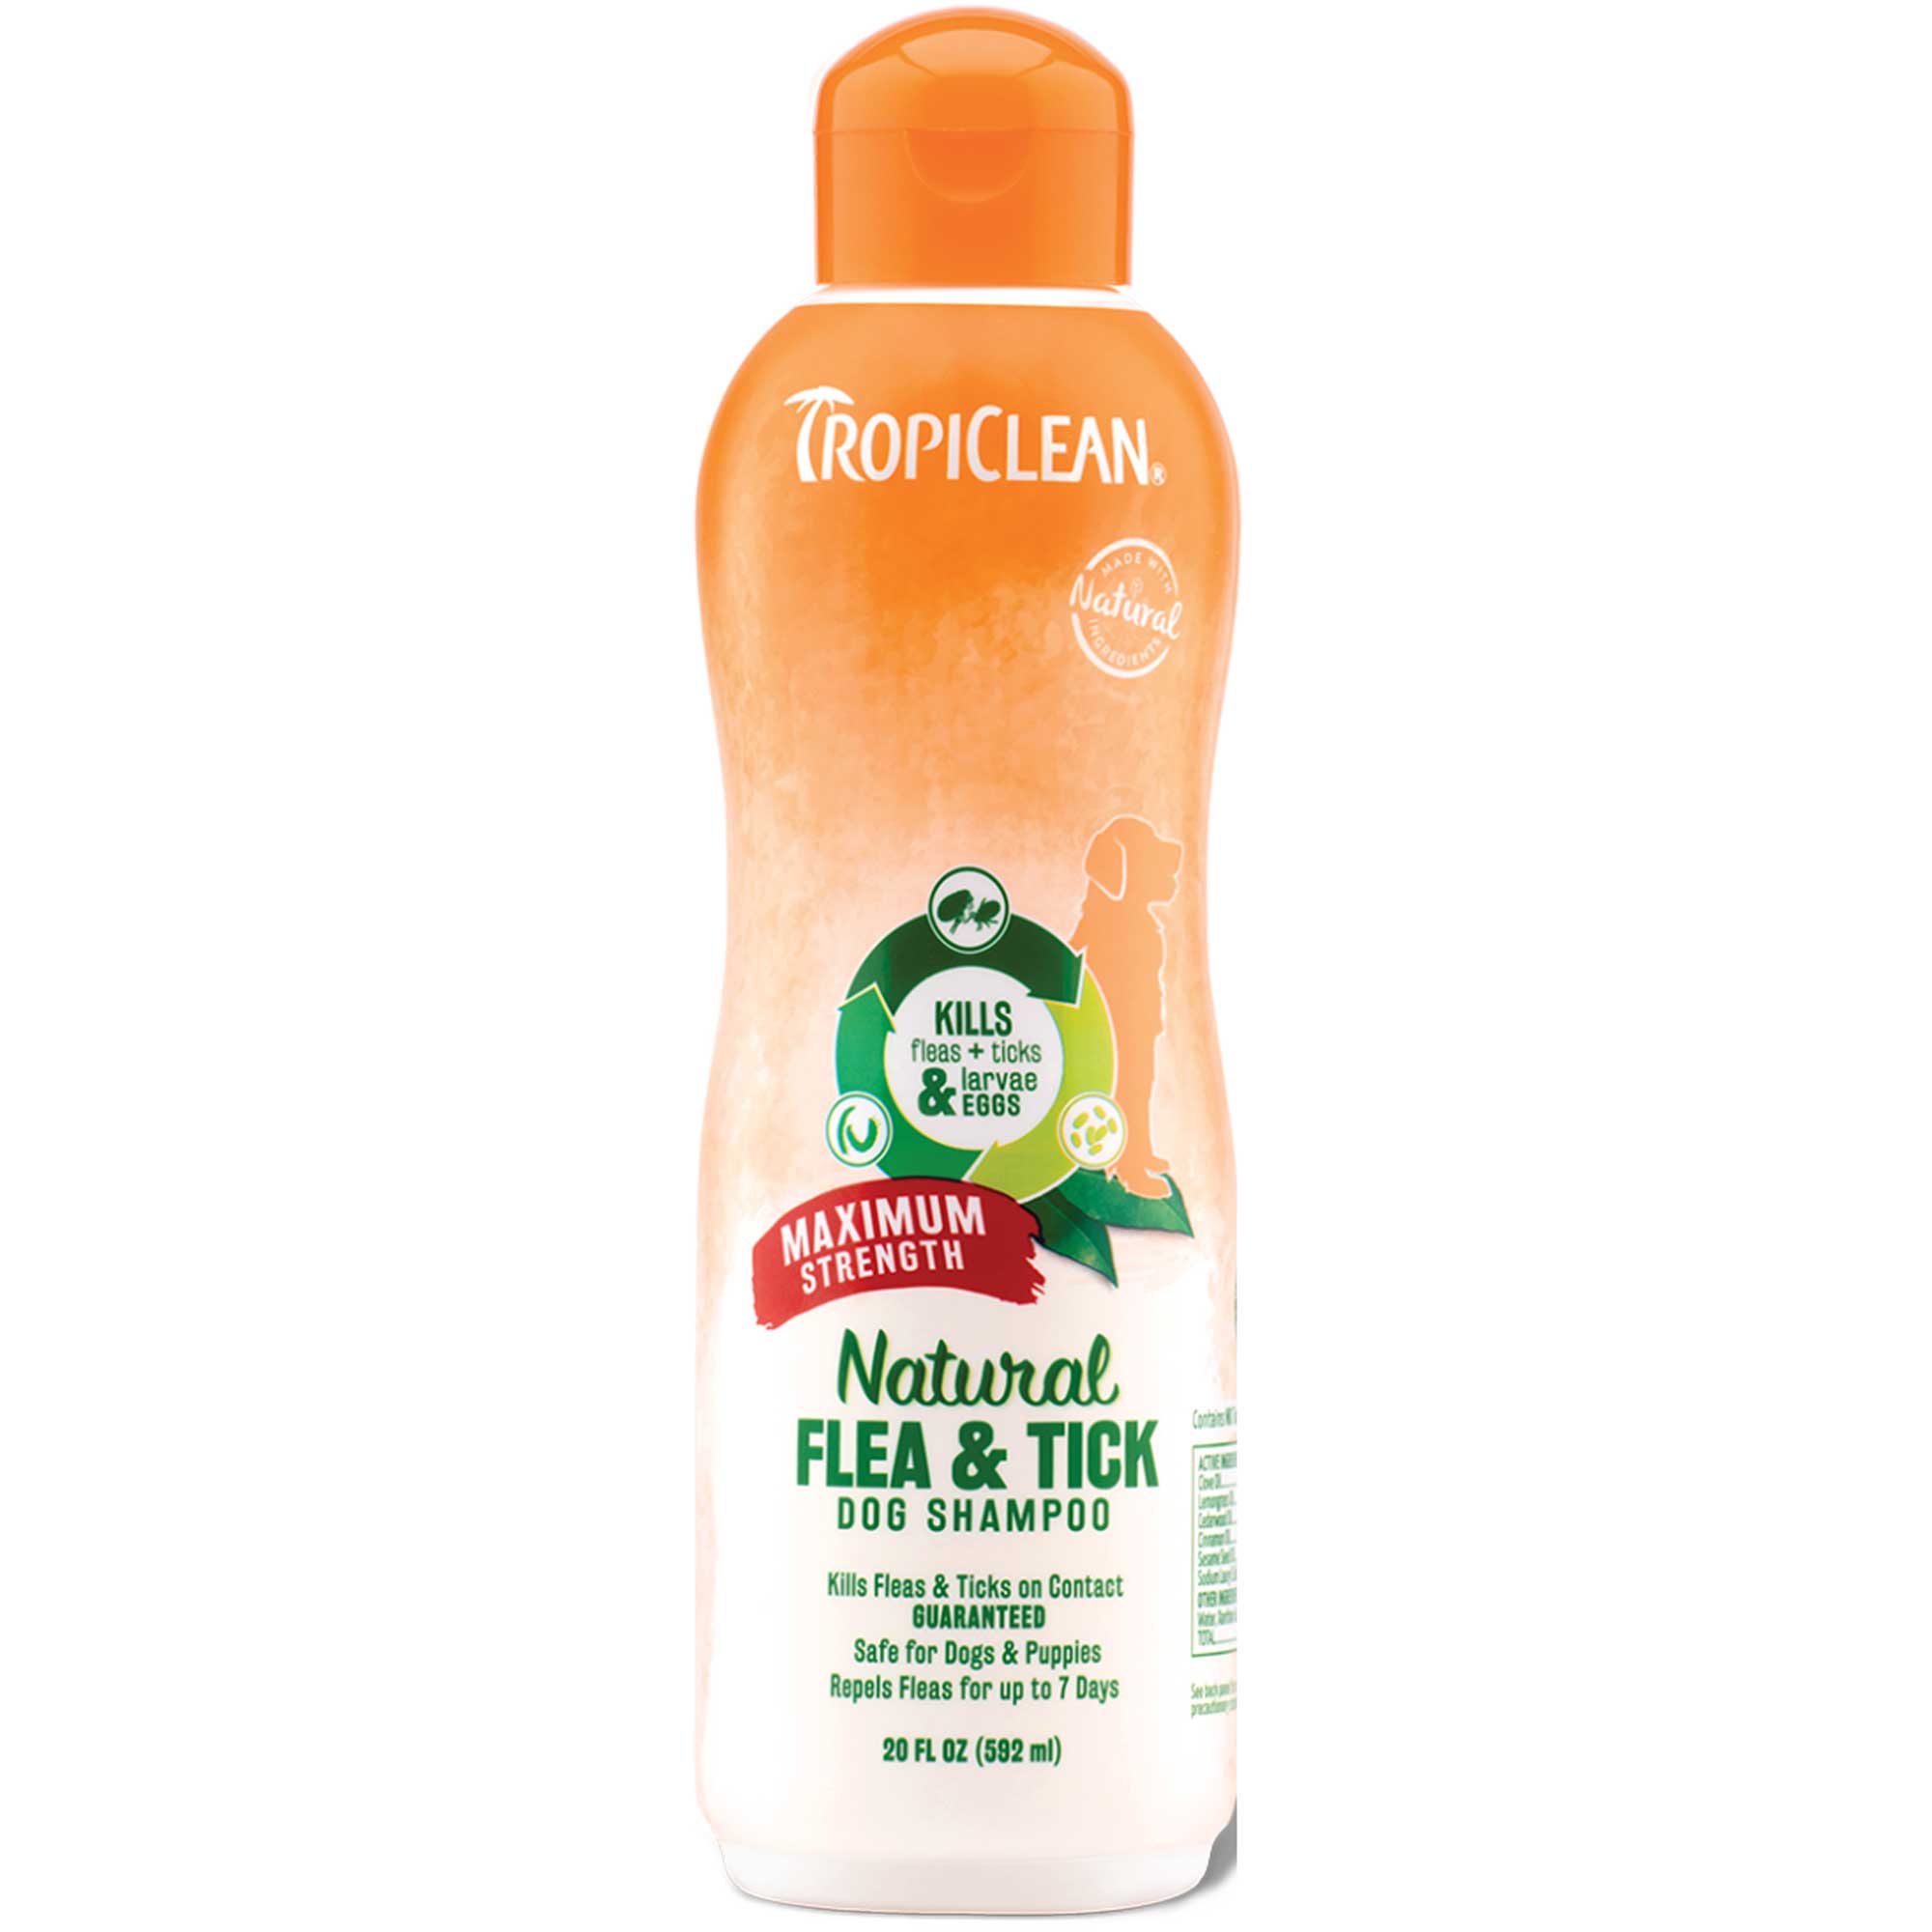 TropiClean Natural Flea & Tick Maximum Strength Shampoo Usage